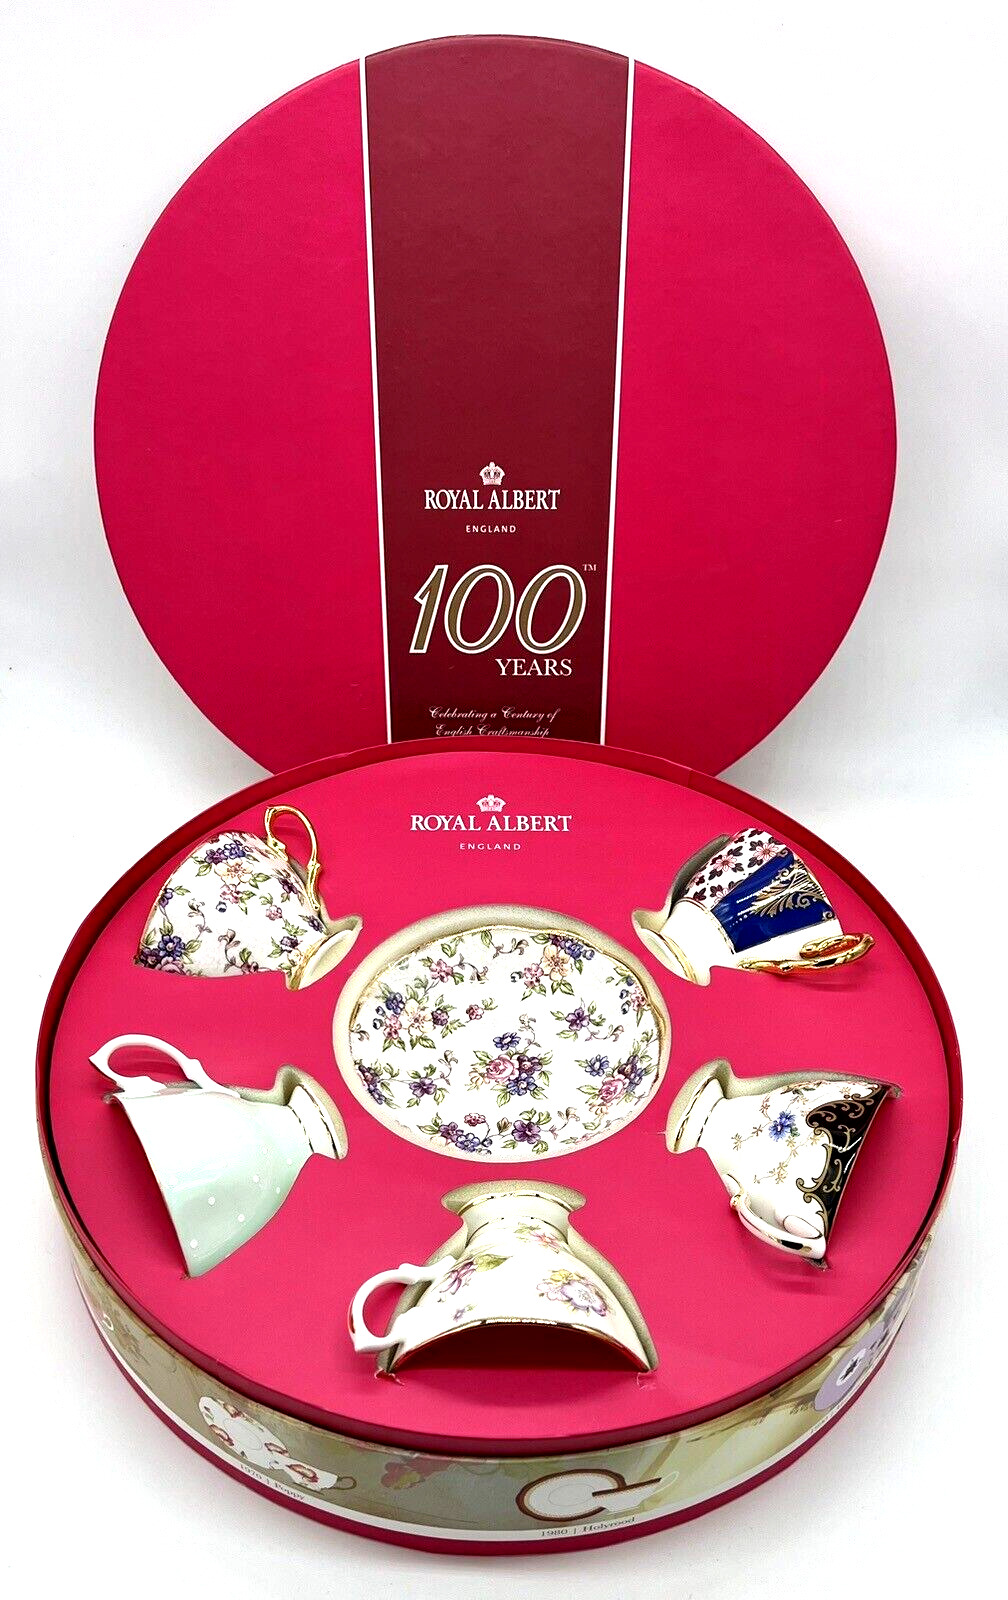 Royal Albert 100 Years Celebration 5P Bone China Cup & Saucer Set New In Box